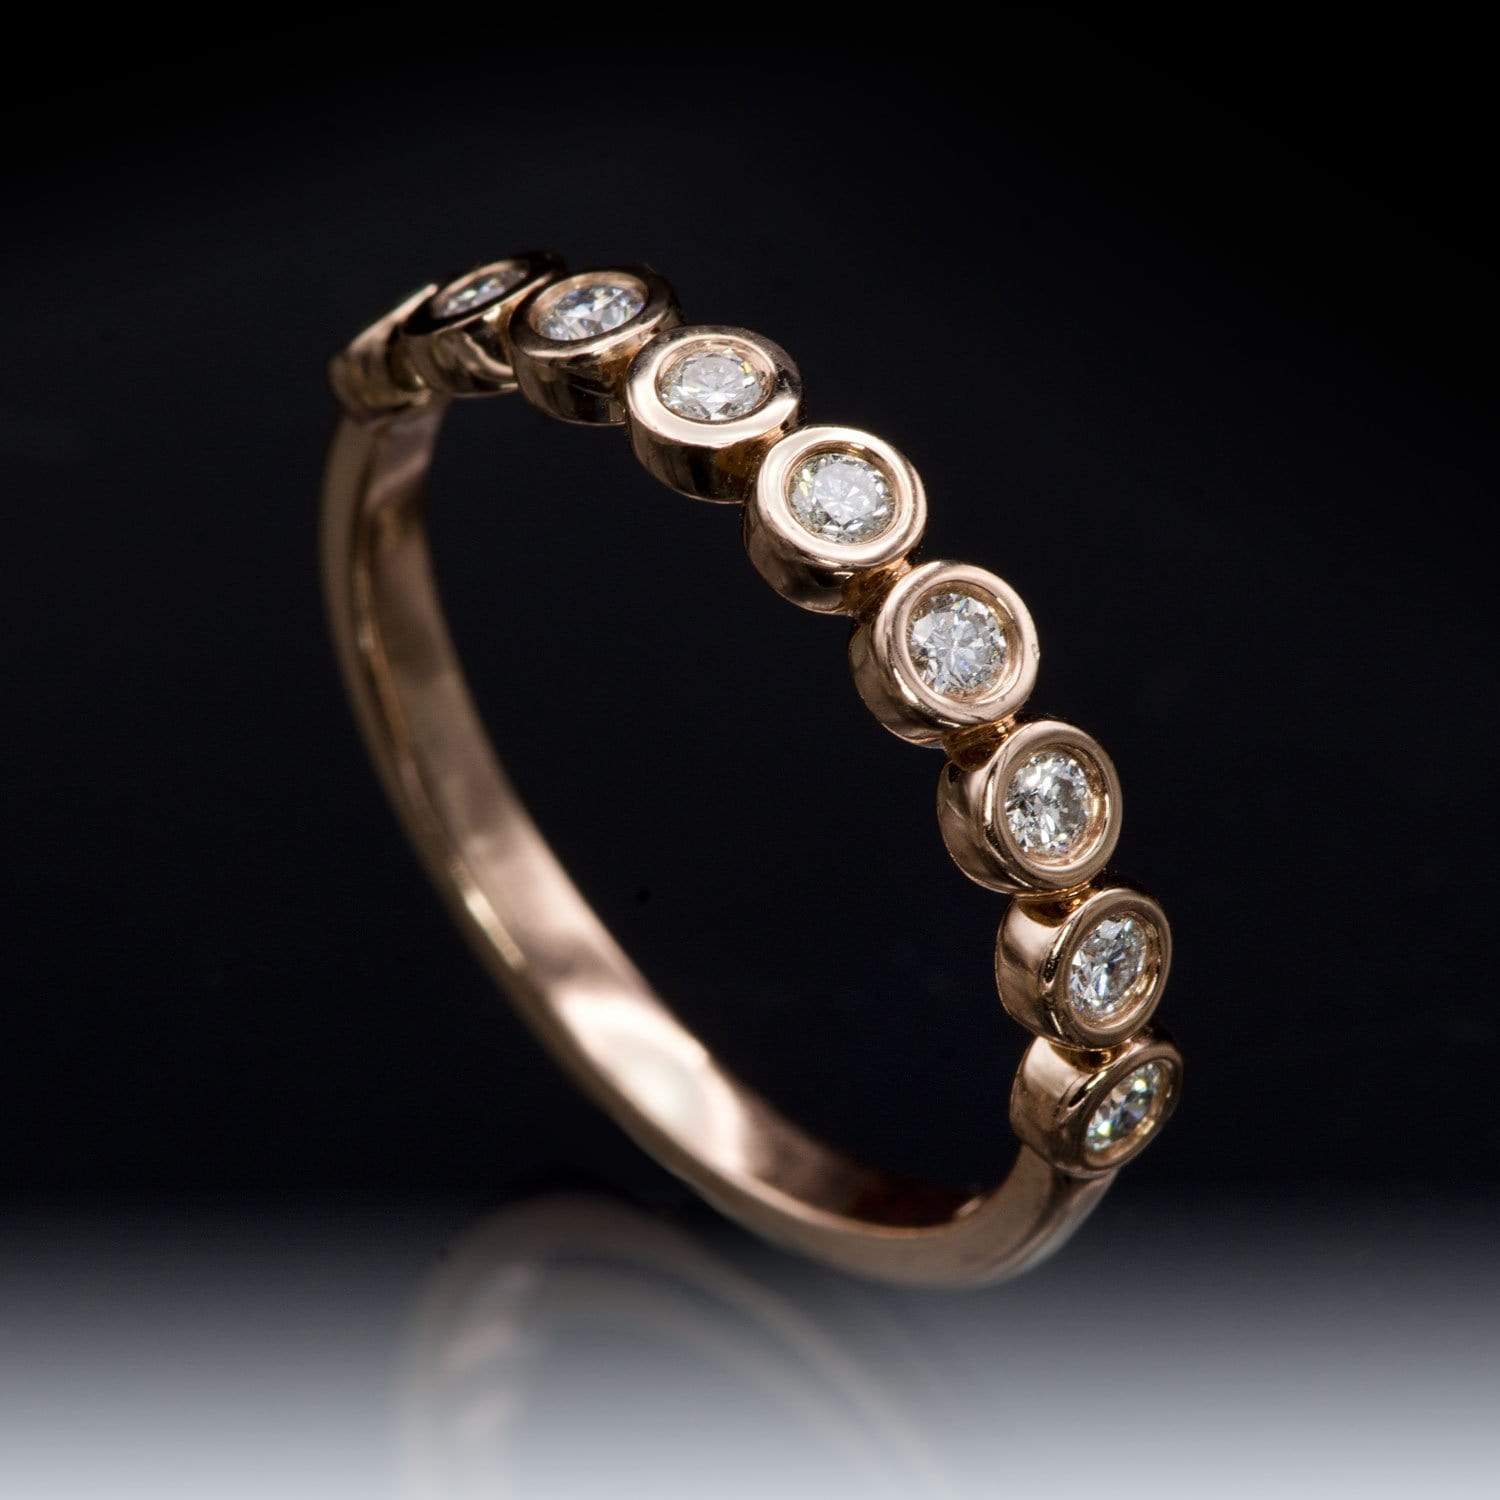 Betty Anniversary Band - Bezel Set Diamond Half Eternity Stacking Wedding Ring 1/4 CTW (Min): 2mm diamonds / 14k Rose Gold Ring by Nodeform